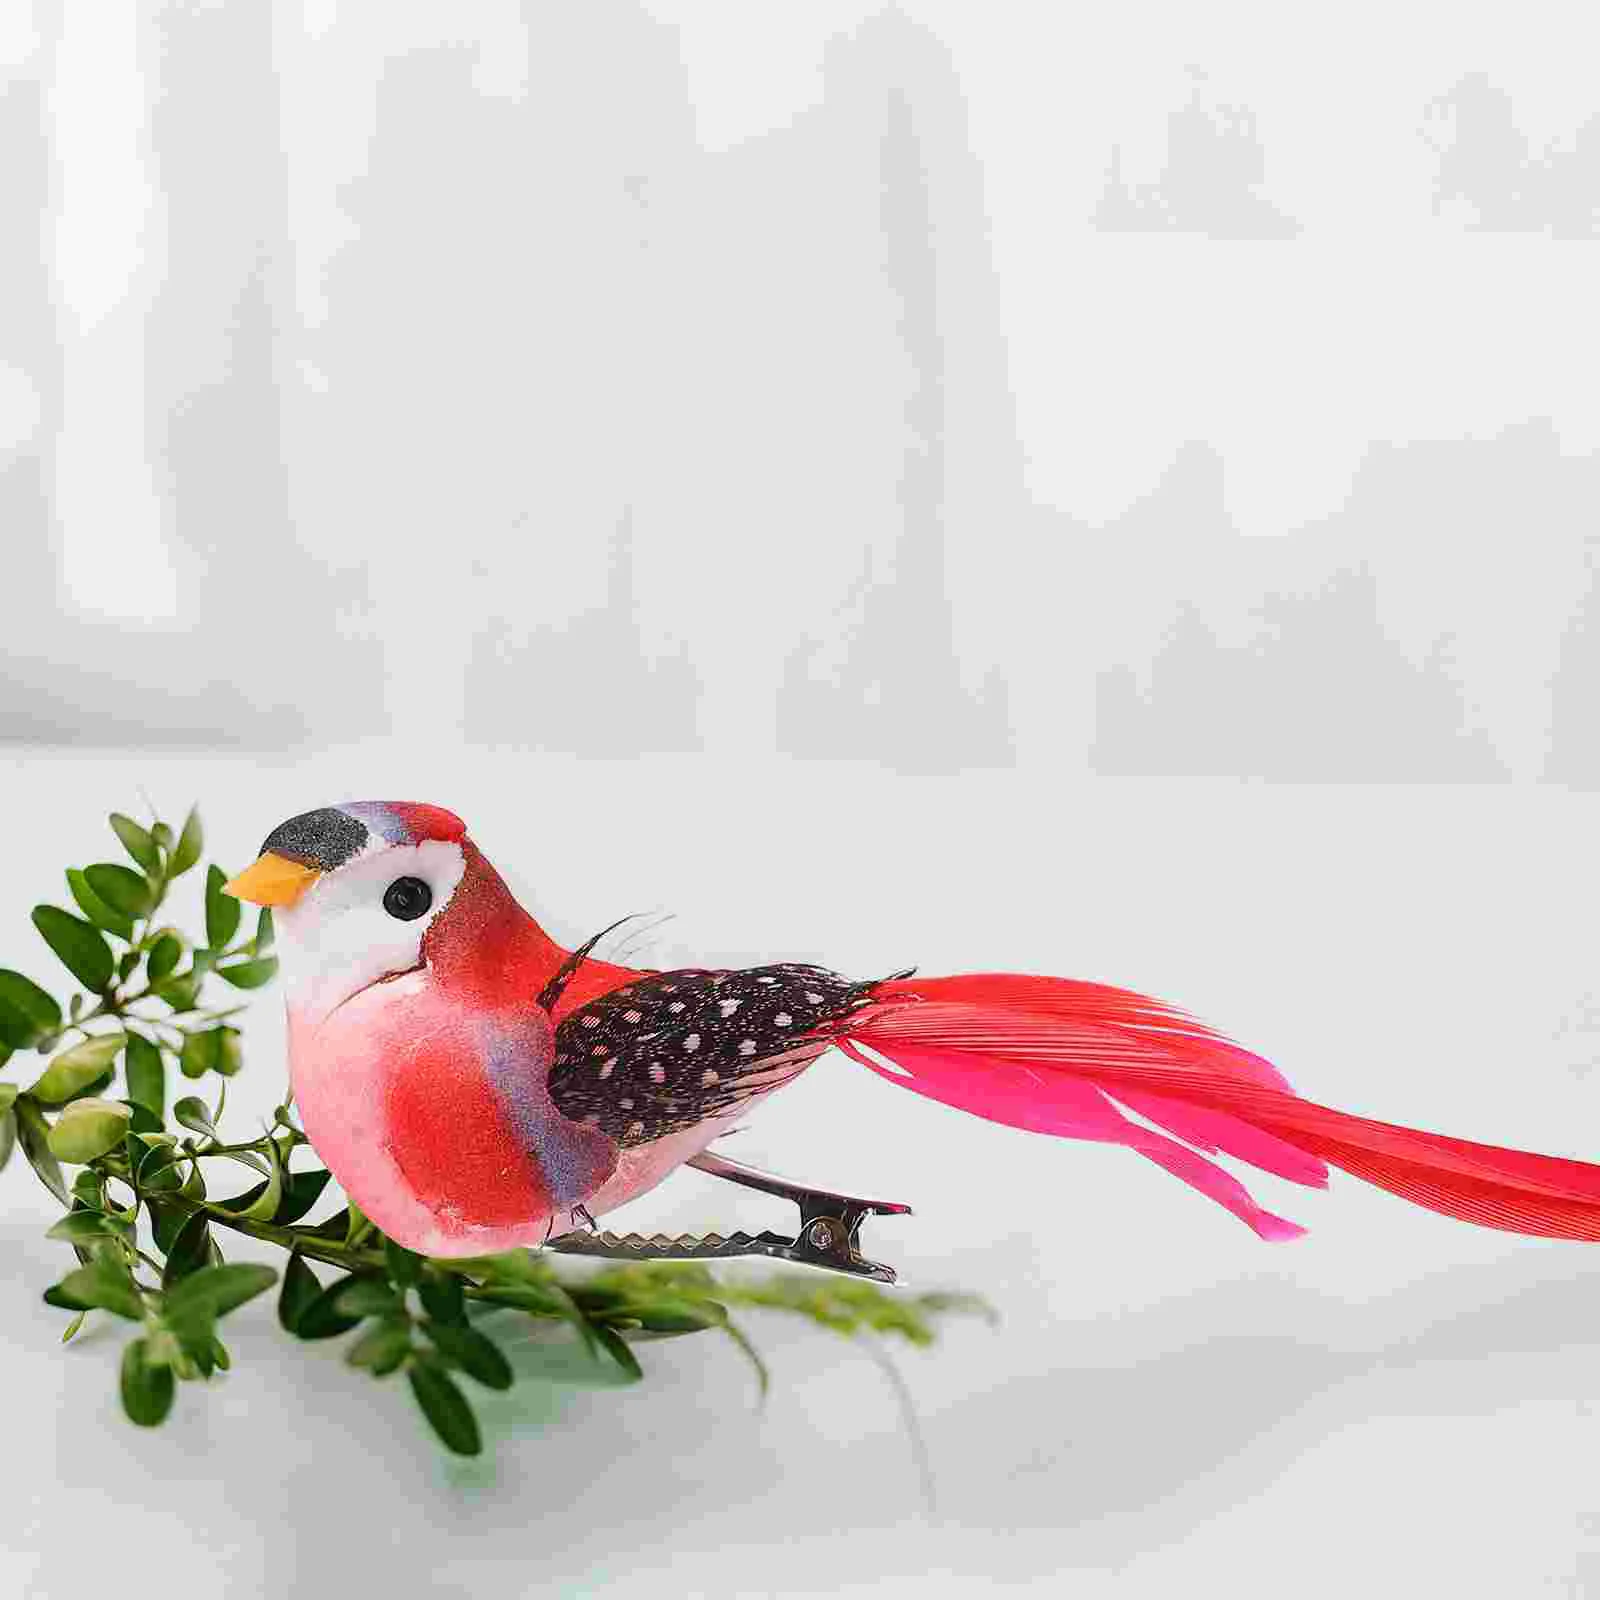 12 Pcs Artificial Birds Crafts Desk Topper Decorative Birds Garden Birds Cardinals Ornament